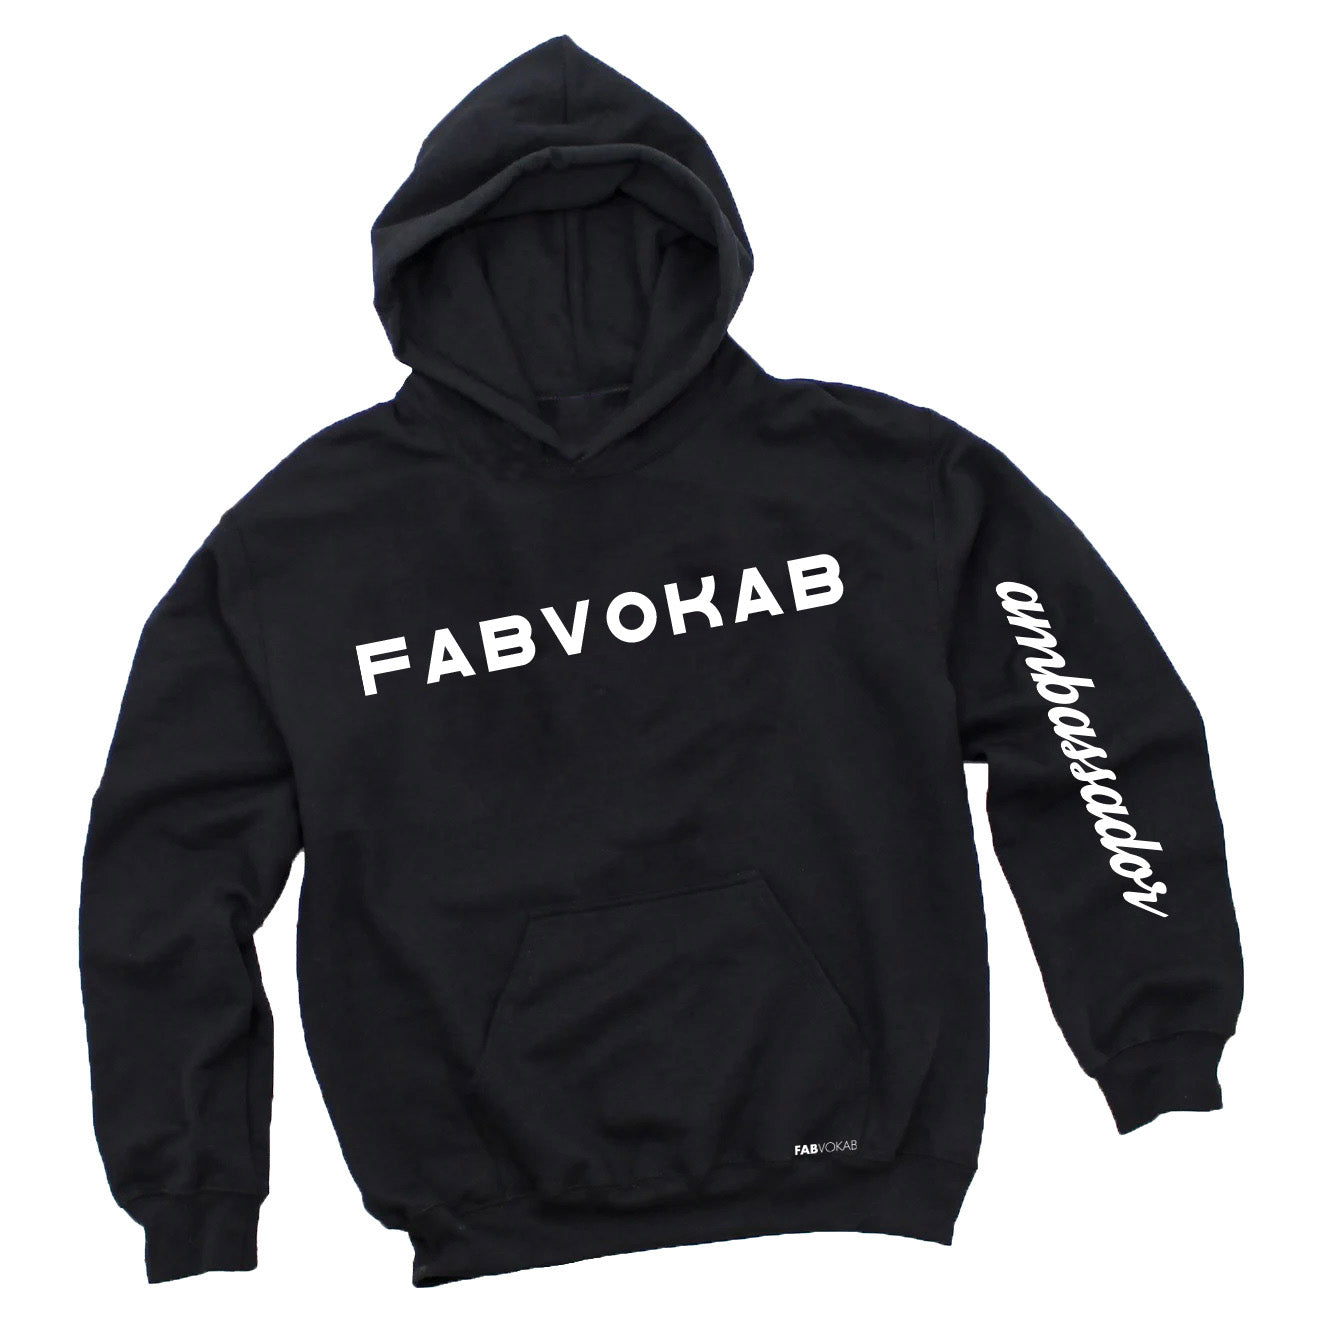 FABVOKAB Ambassador unisex, girls, boys, teens black hoodie